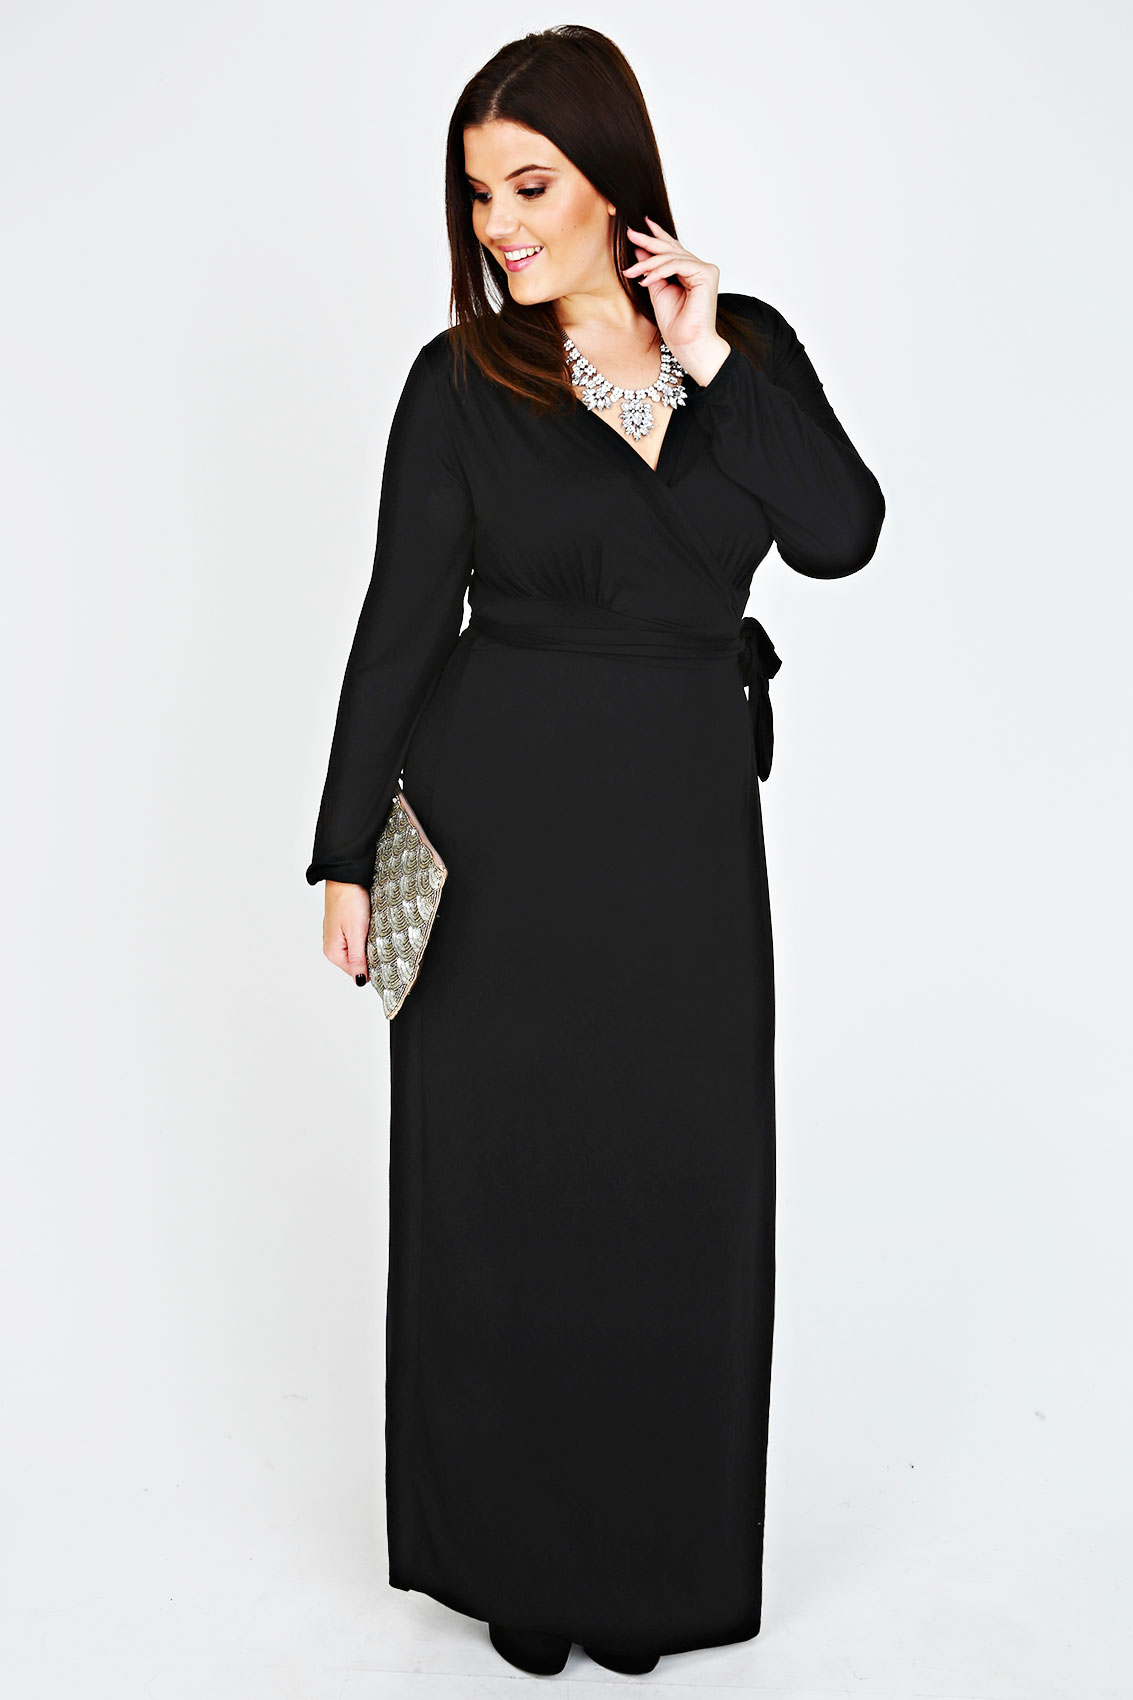 Black Long Sleeve Wrap Maxi Dress Plus size 14,16,18,20,22,24,26,28,30